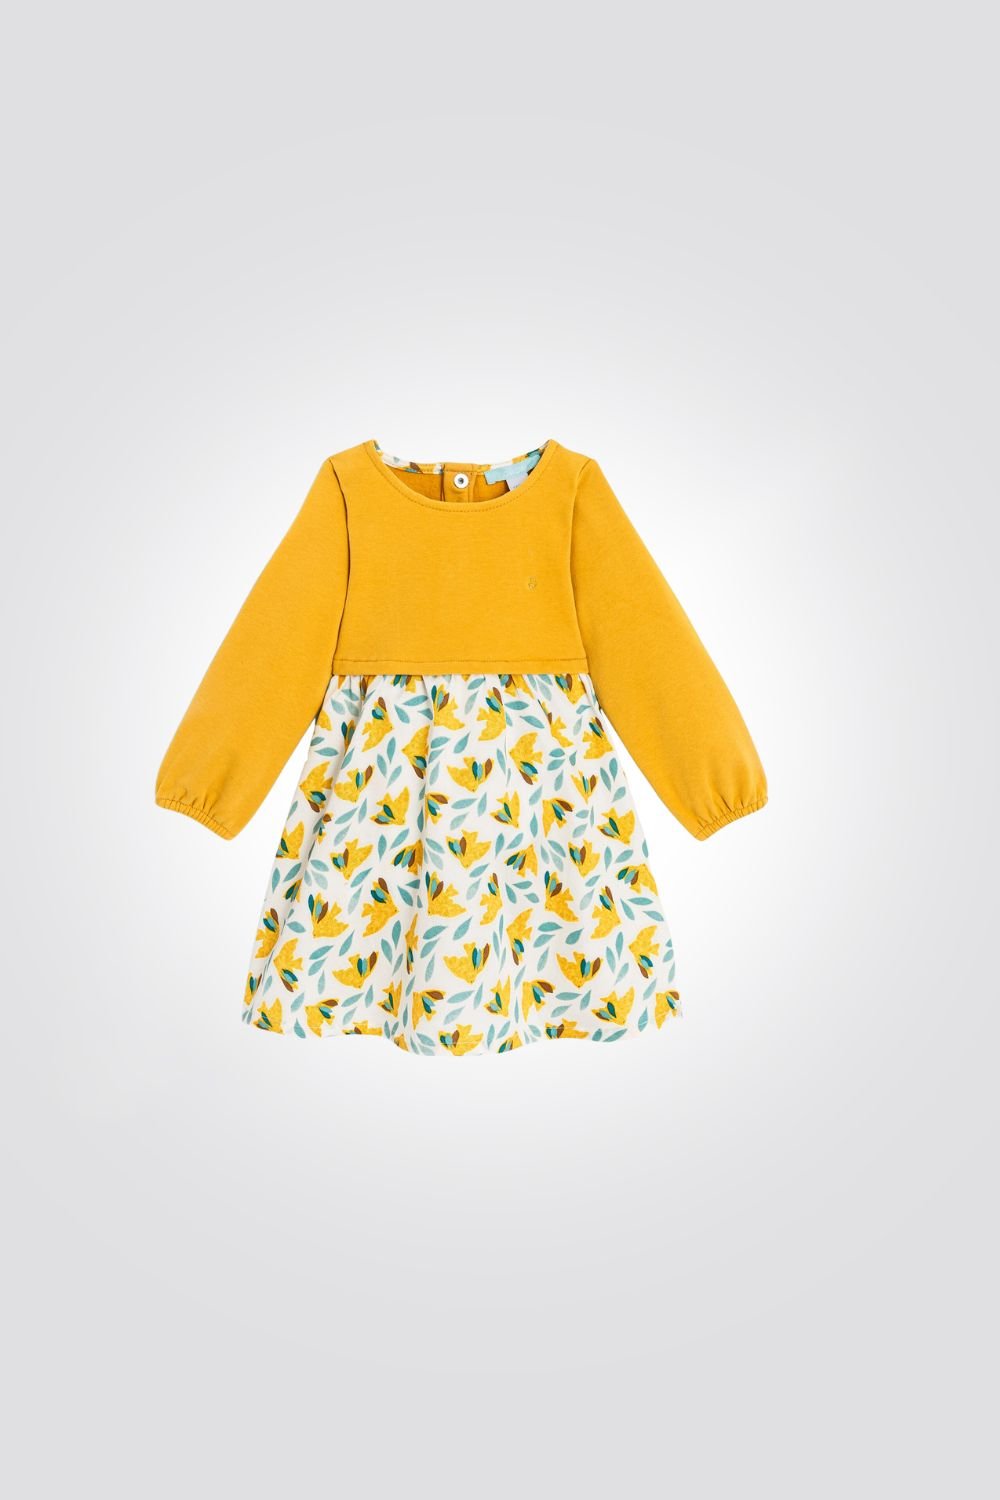 OBAIBI - שמלת תינוקות בשילוב פוטר צהוב חלק והדפס ציפורים צהובות על לבן - MASHBIR//365